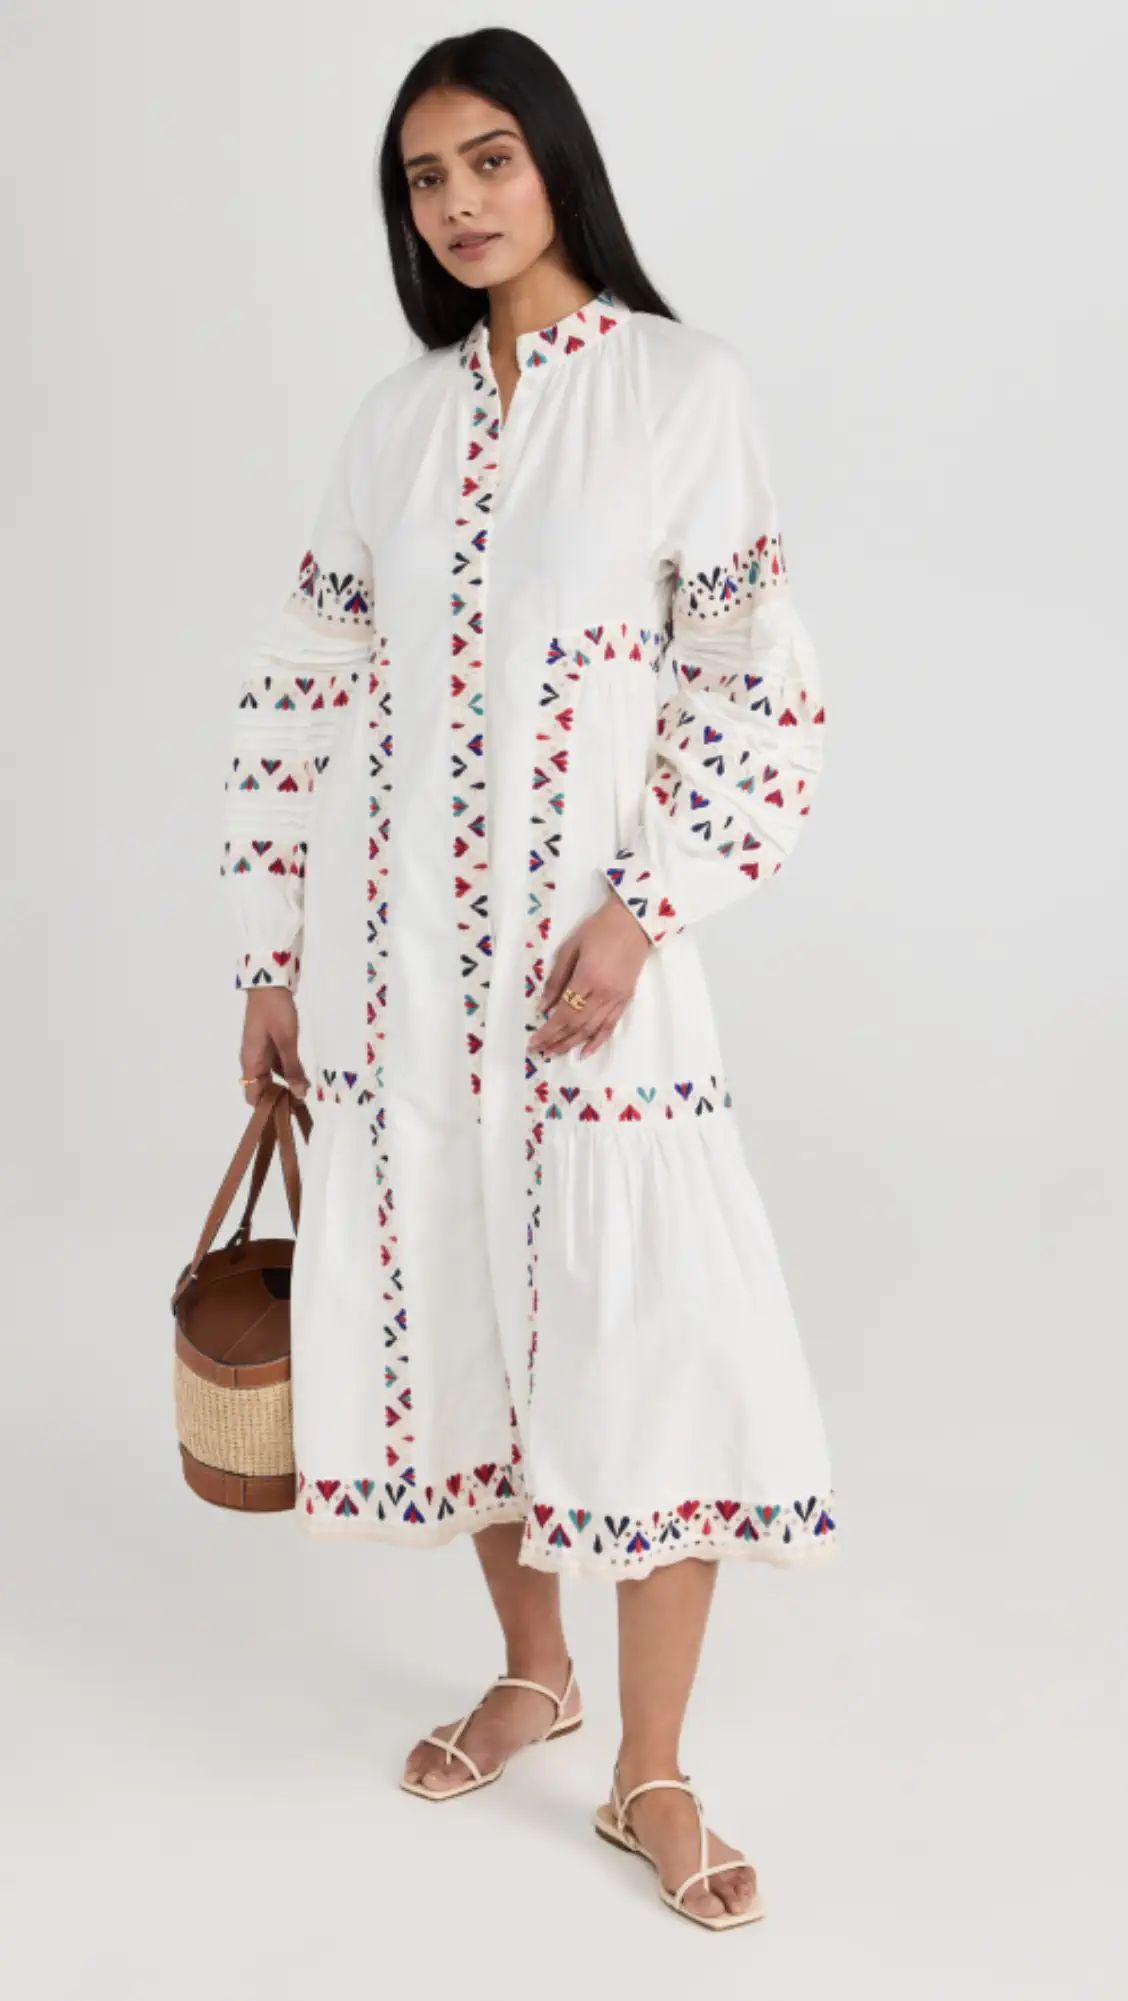 Alicia Embroidery Dress | Shopbop